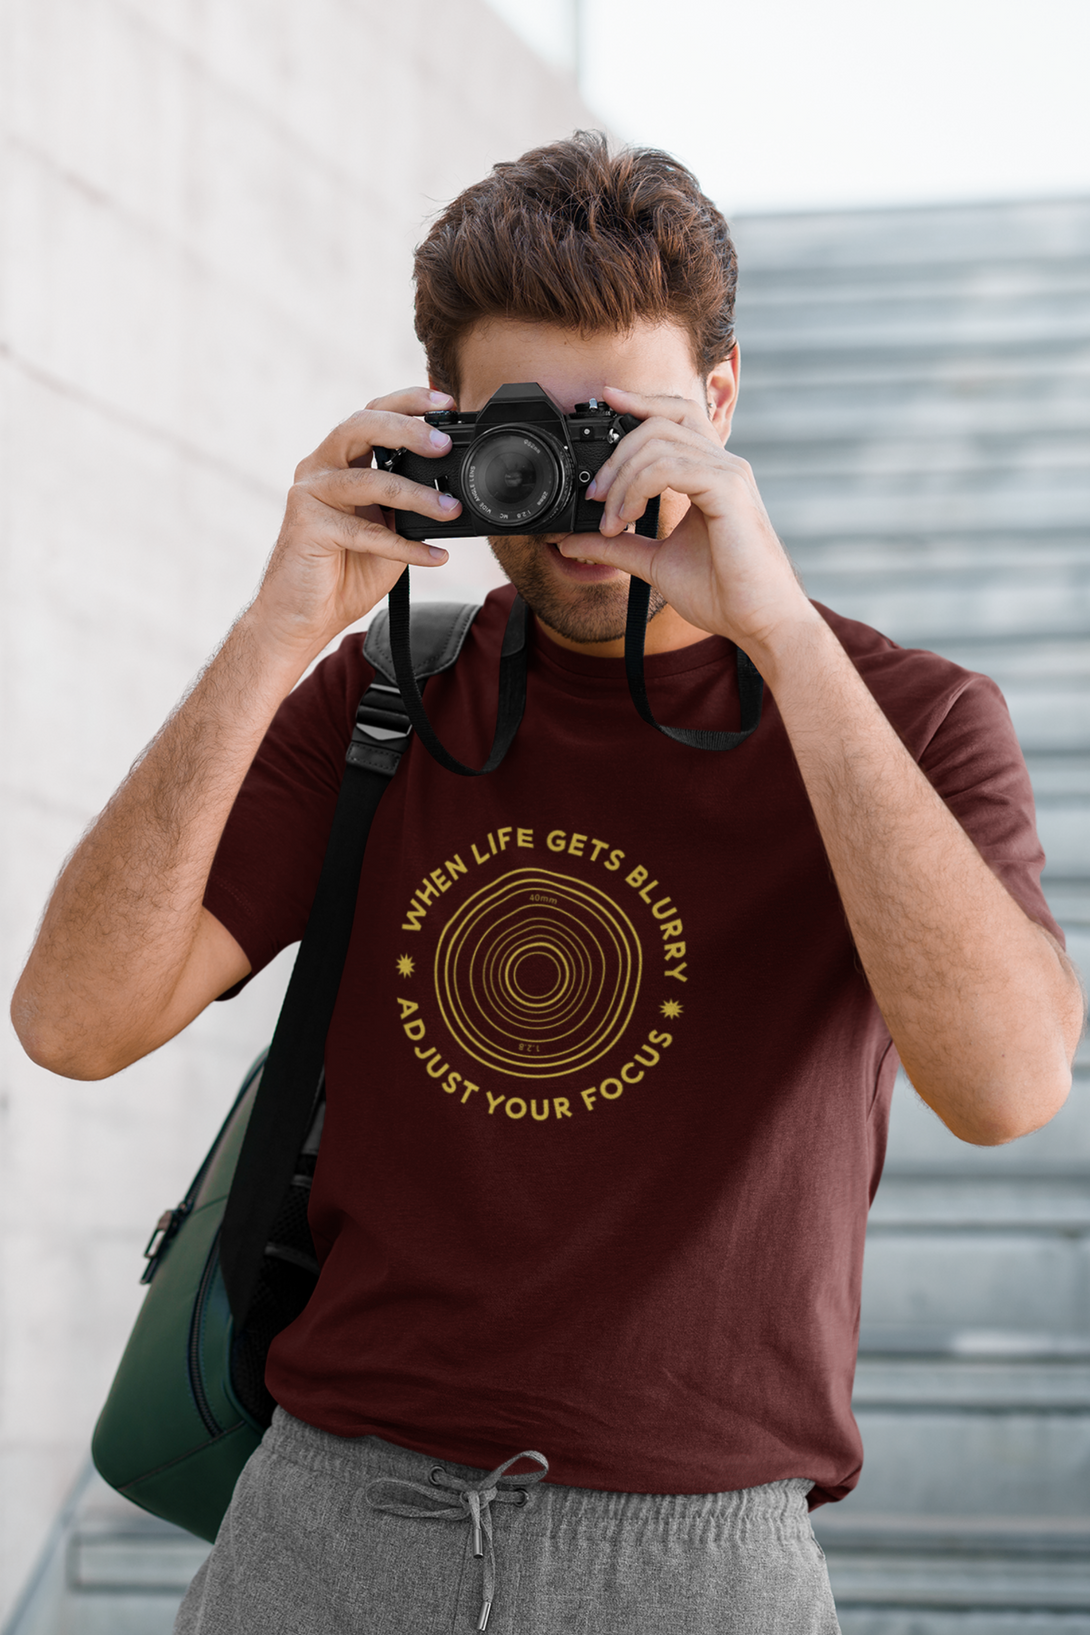 Adjust Your Focus Printed T-Shirt For Men - WowWaves - 2